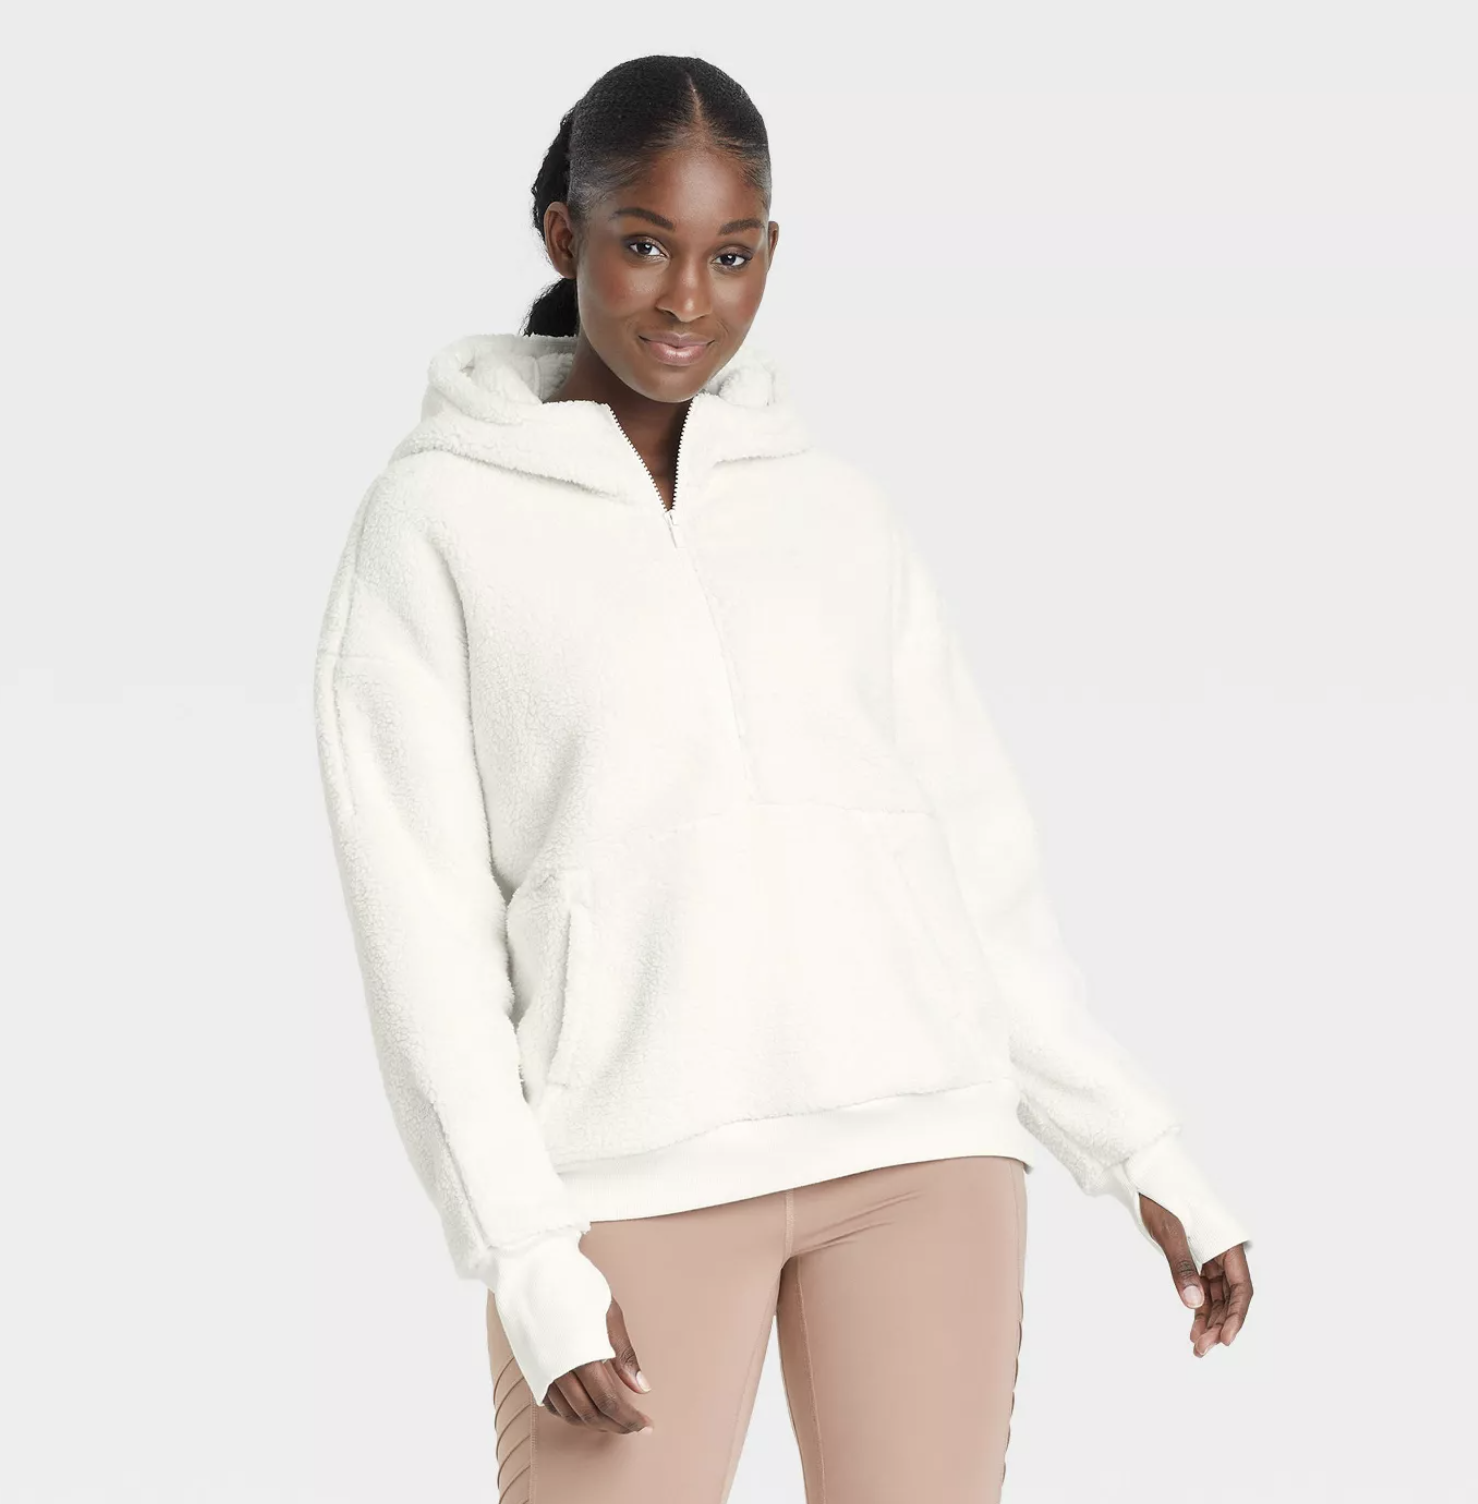 model wearing the hoodie in white